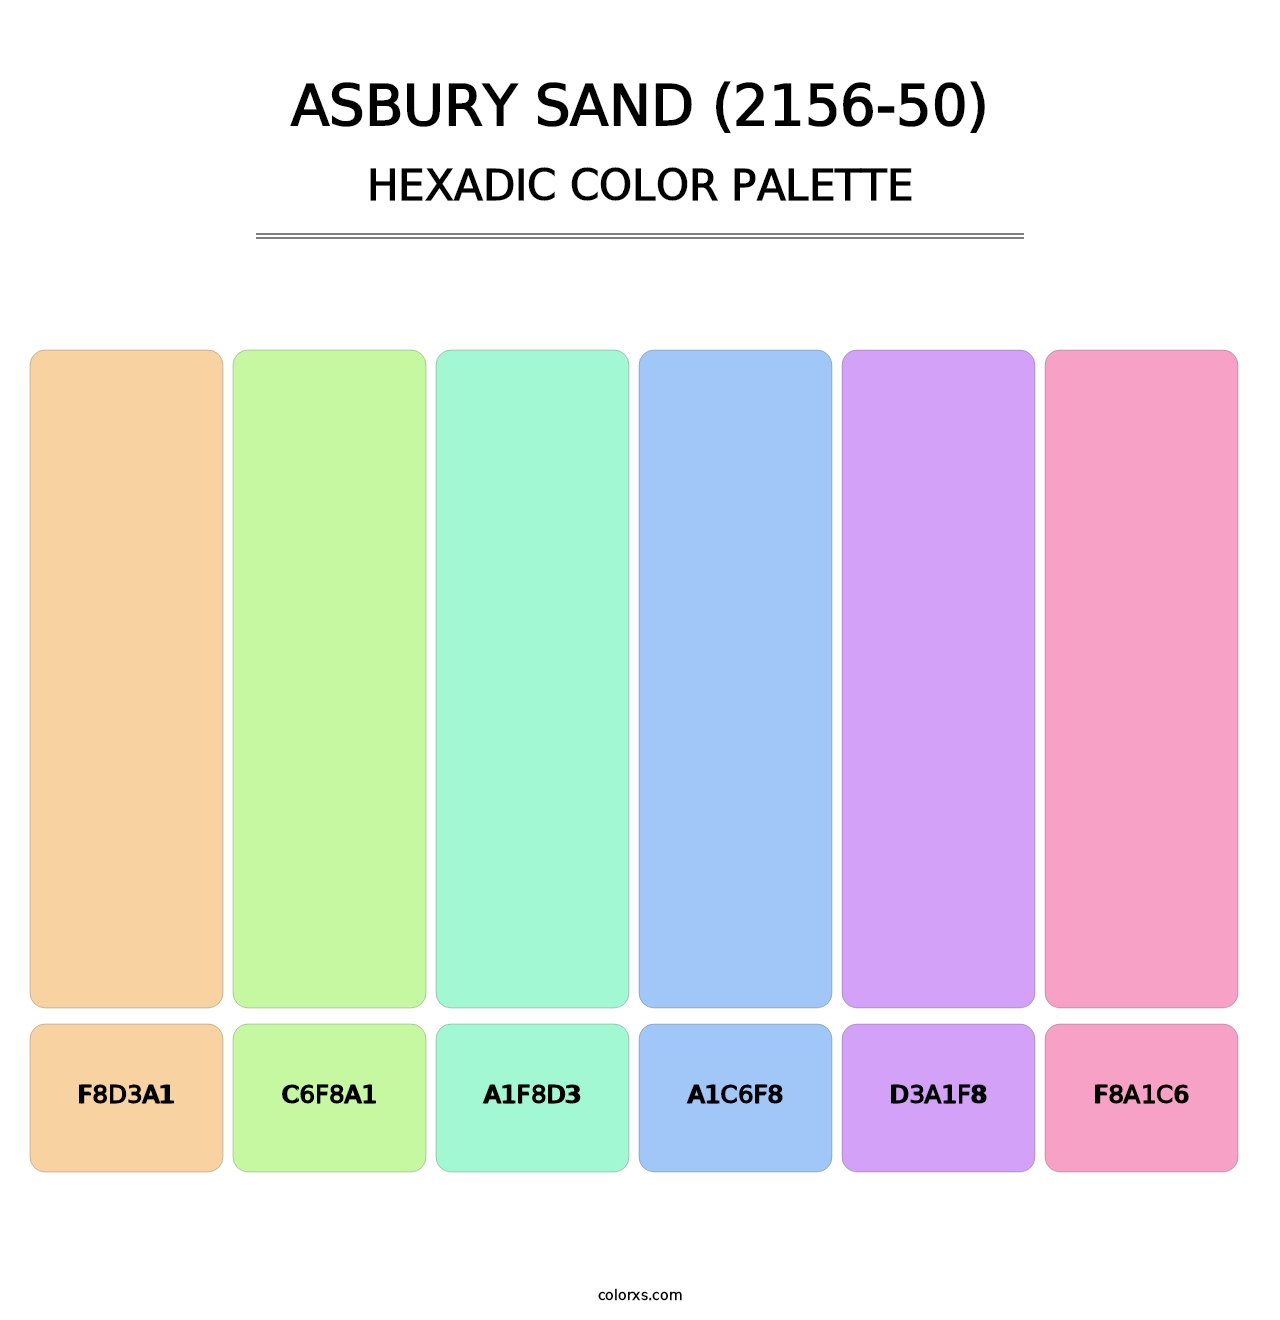 Asbury Sand (2156-50) - Hexadic Color Palette